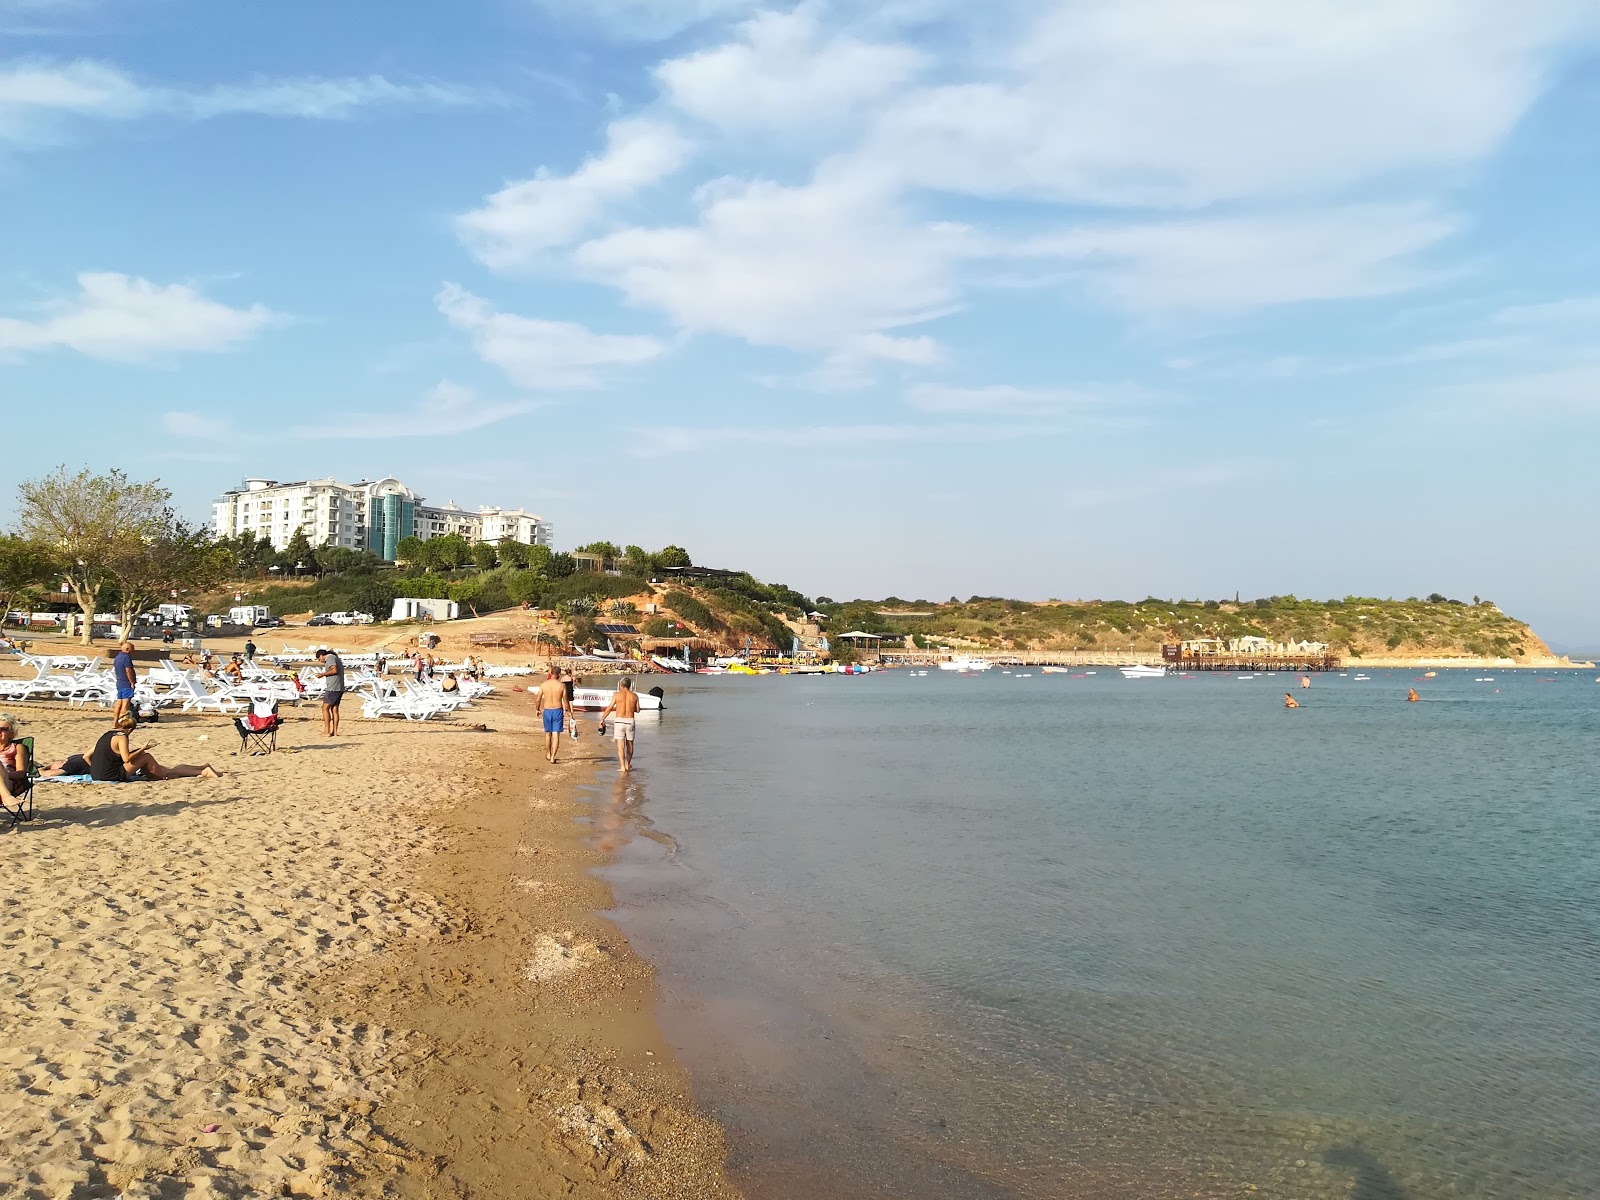 Fotografija Didim resort beach z turkizna čista voda površino